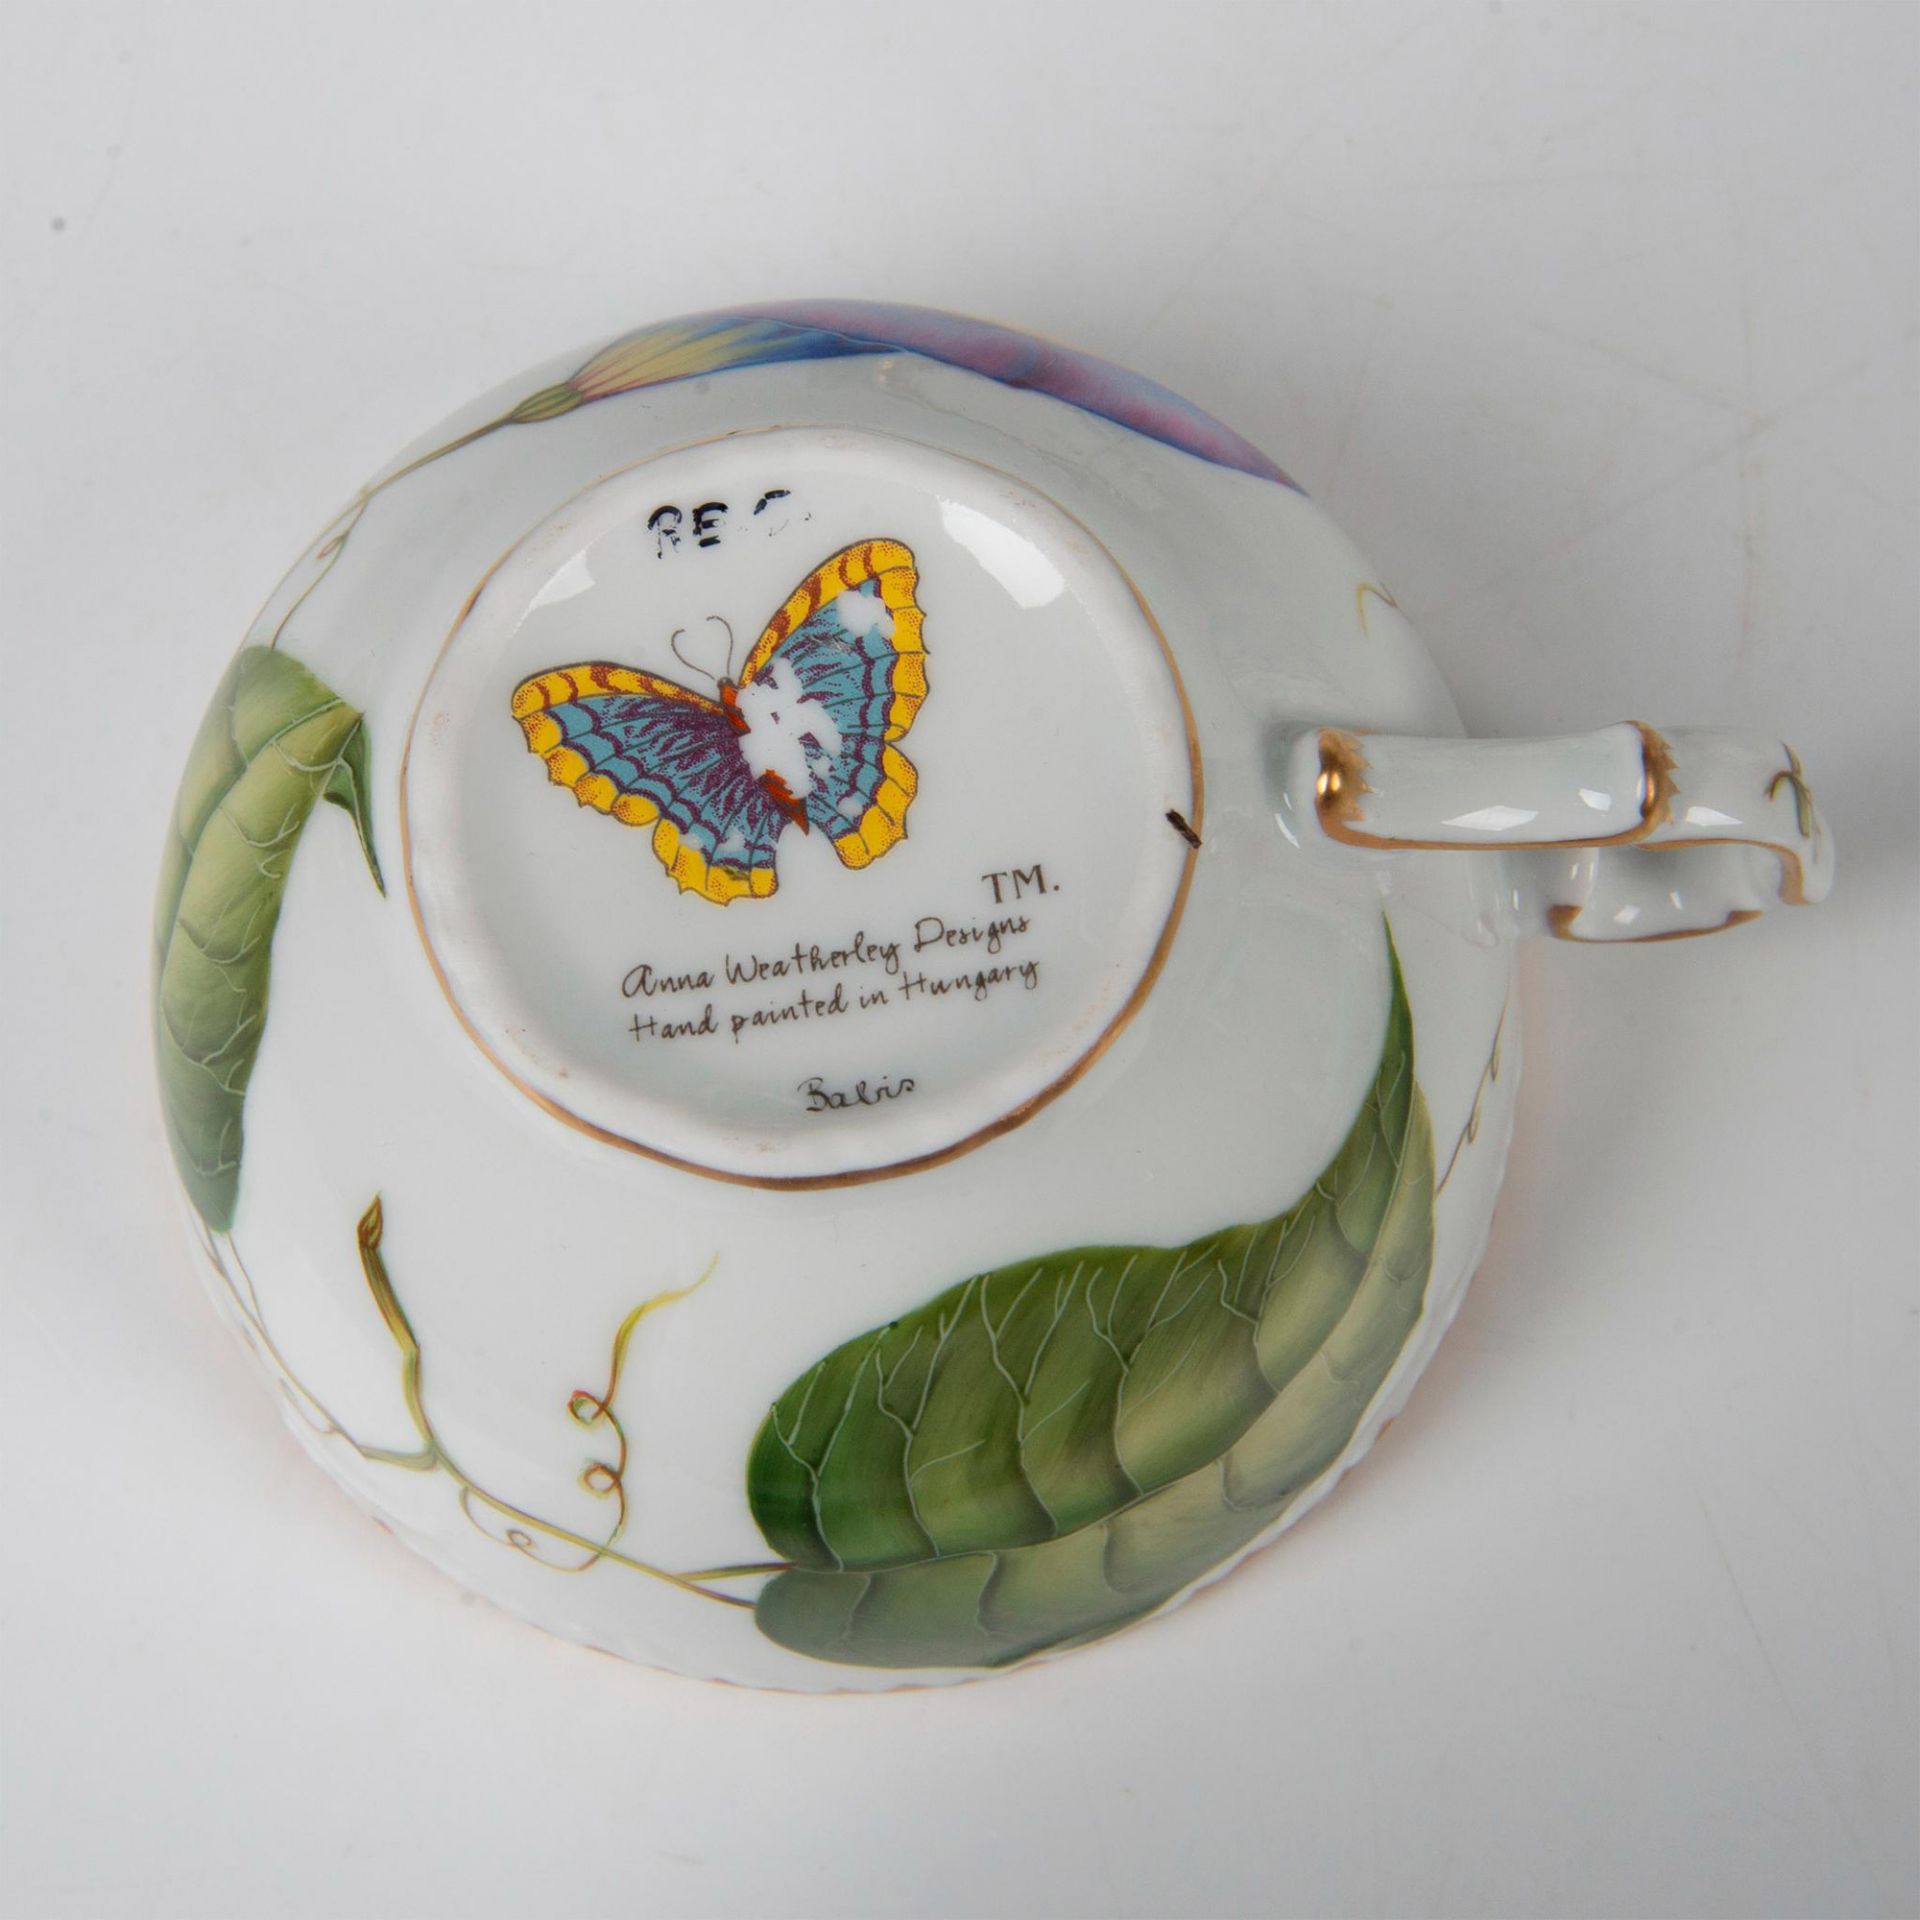 10pc Anna Weatherley Porcelain Kitchenware - Image 7 of 9